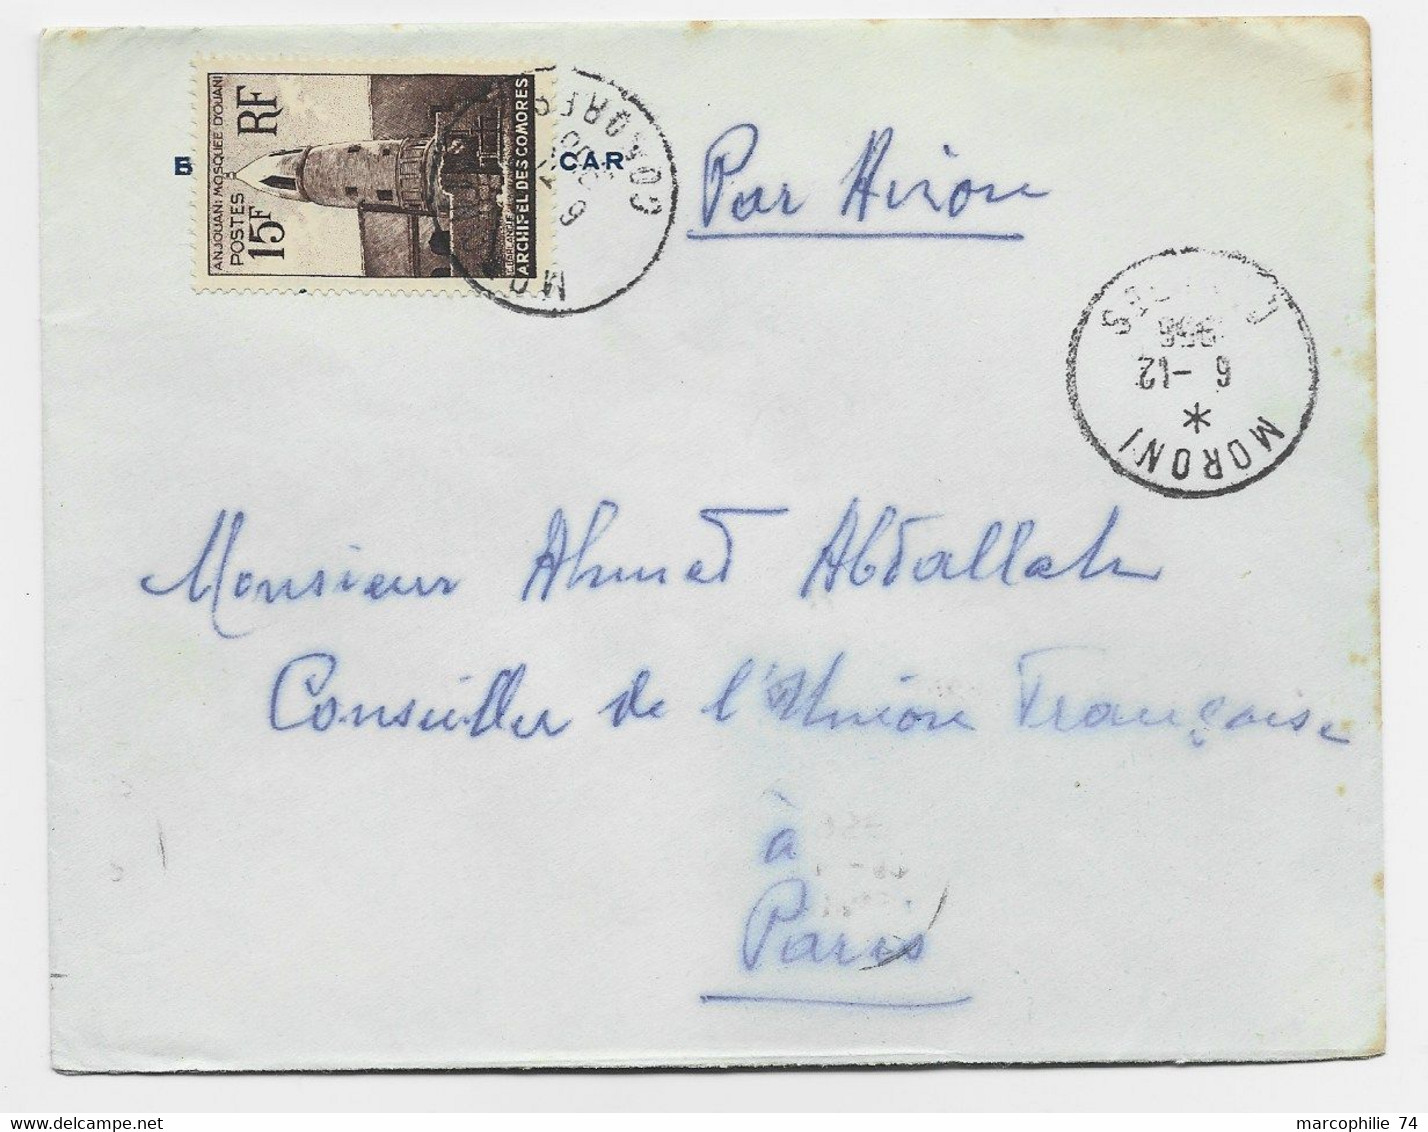 COMORES 15FR SEUL LETTRE AVION MORONI 6.12.1958 ADRESSEE CONSEILLER UNION FRANCAISE A PARIS + VERSO MEC RBV - Covers & Documents